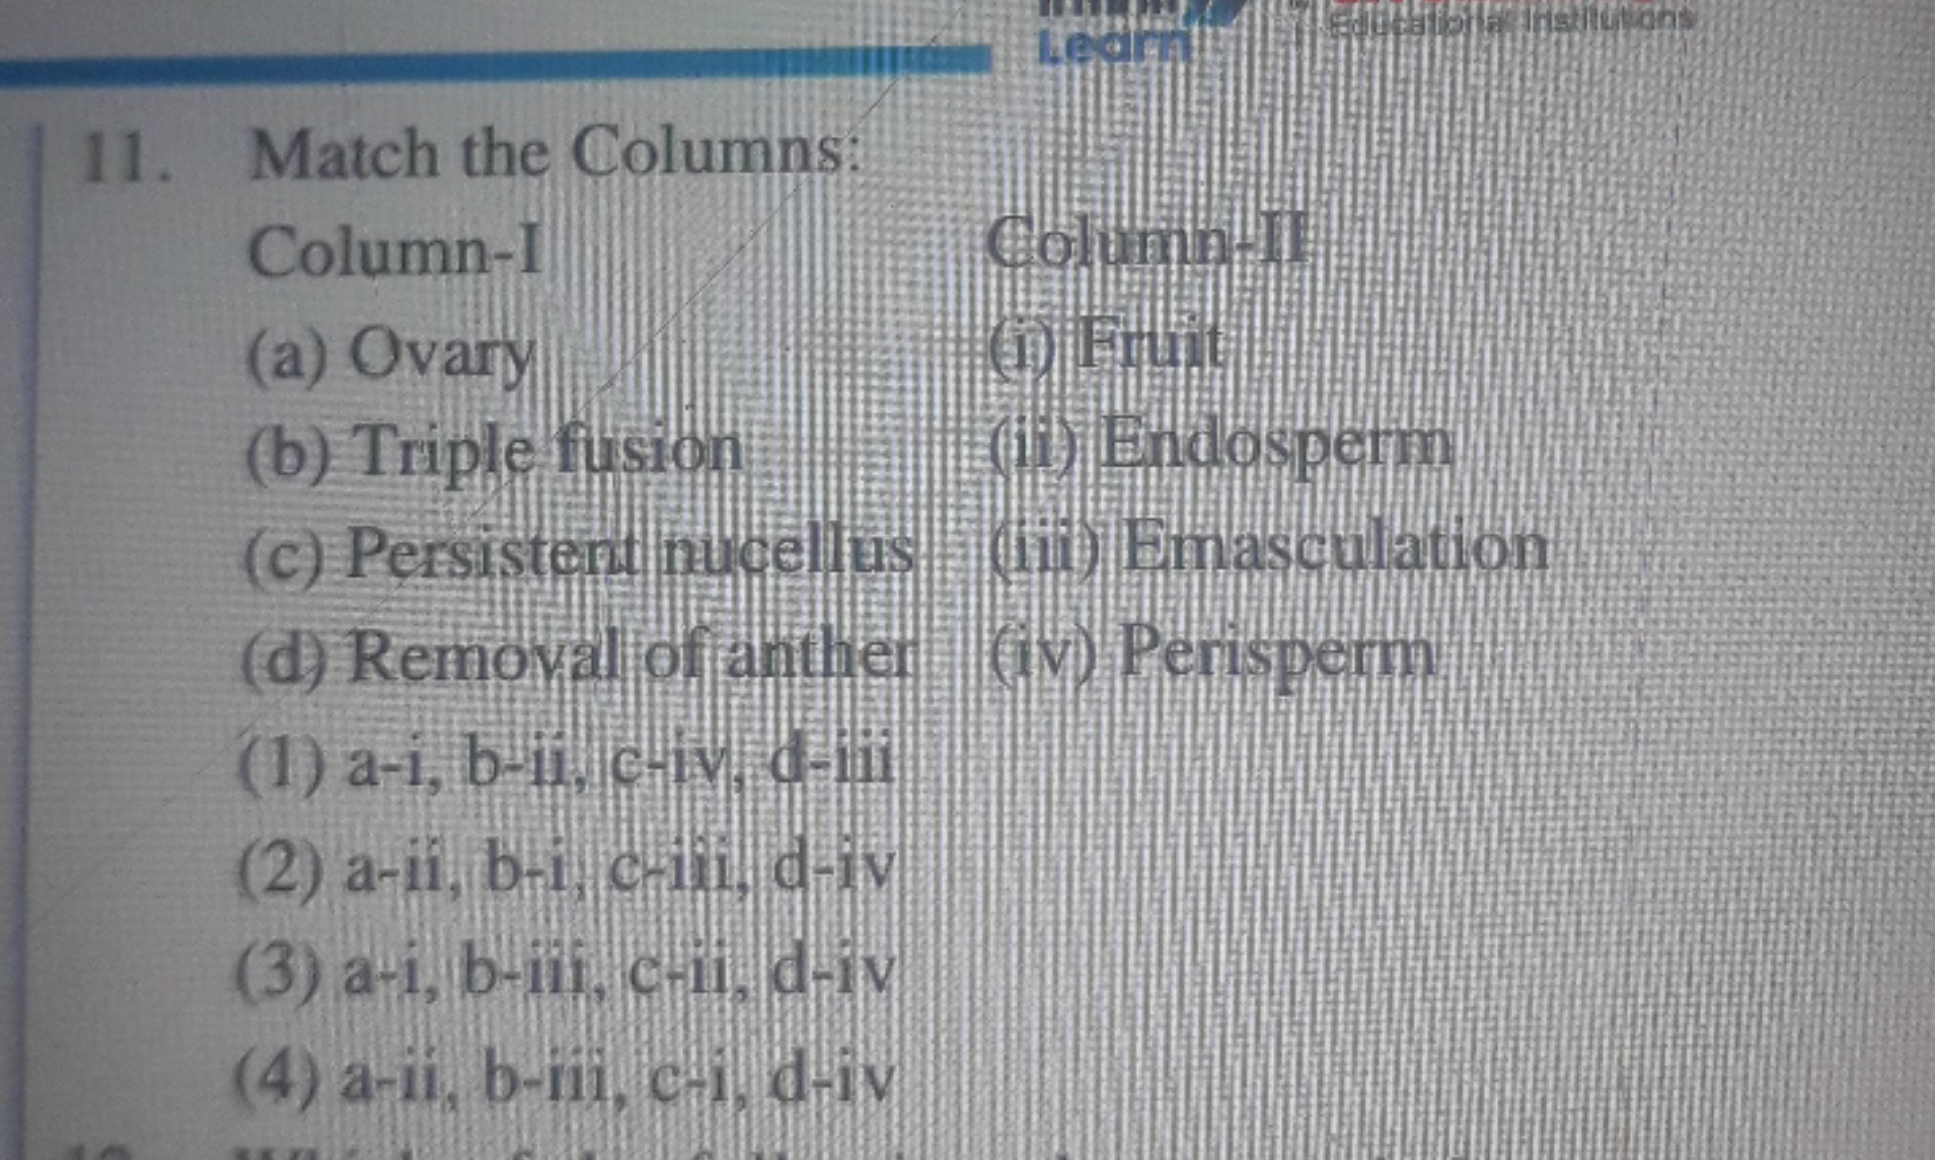 Match the Columns: Column-I columintin (a) Ovary (ii) Emtuit (b) Tripl